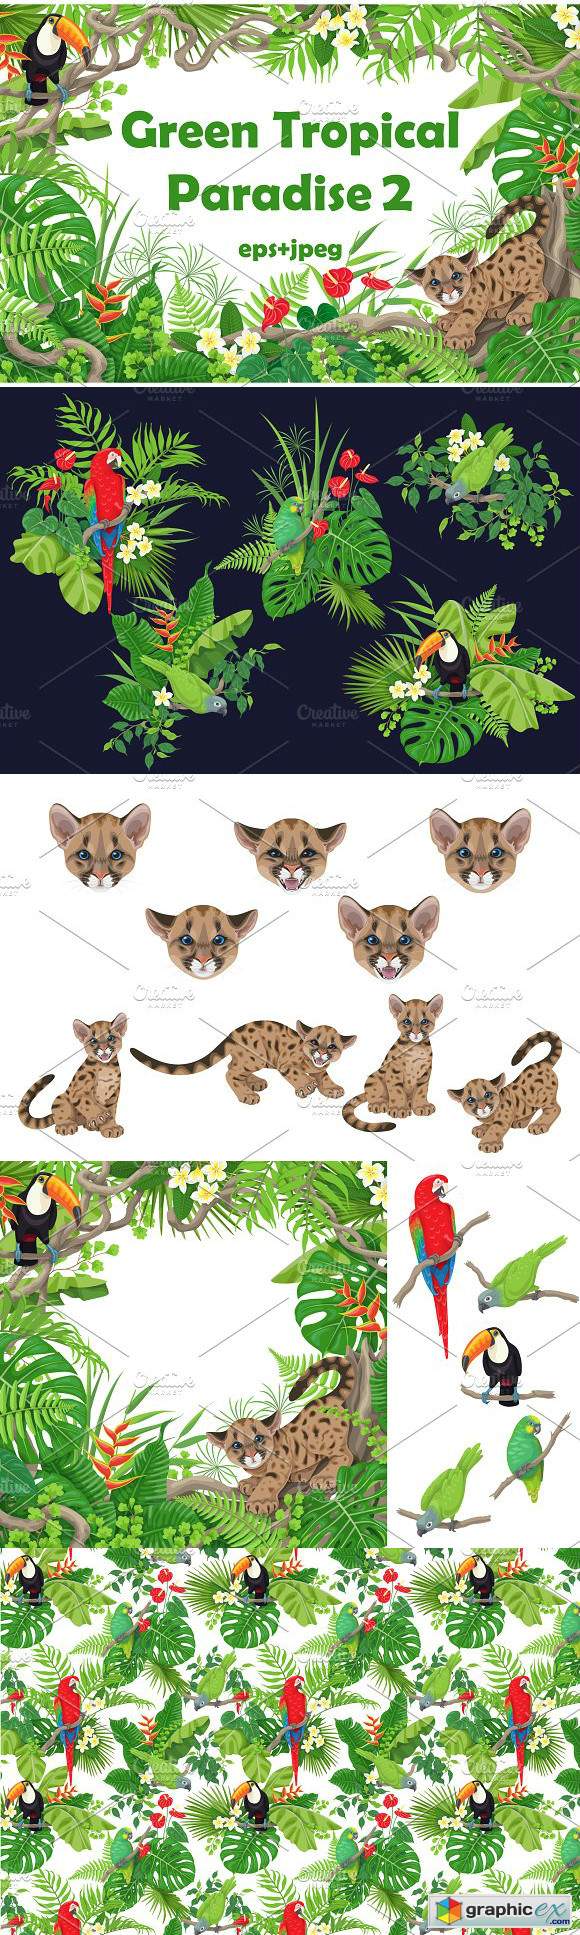 Cougar Cub and Tropical Birds